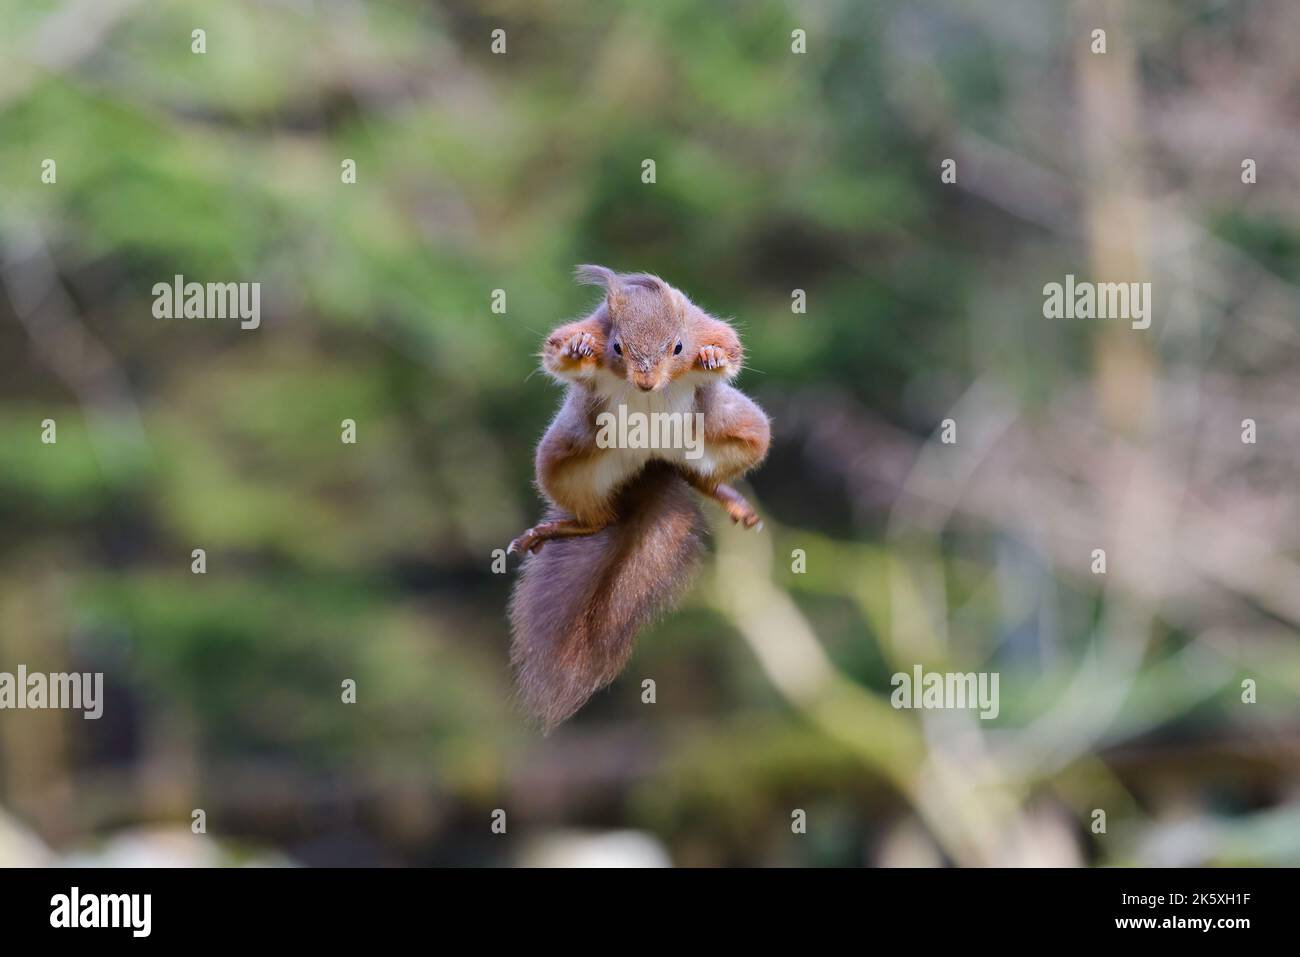 Red Squirrel, Sciurus vulgaris, jumping in mid-air, frontal view Stock Photo